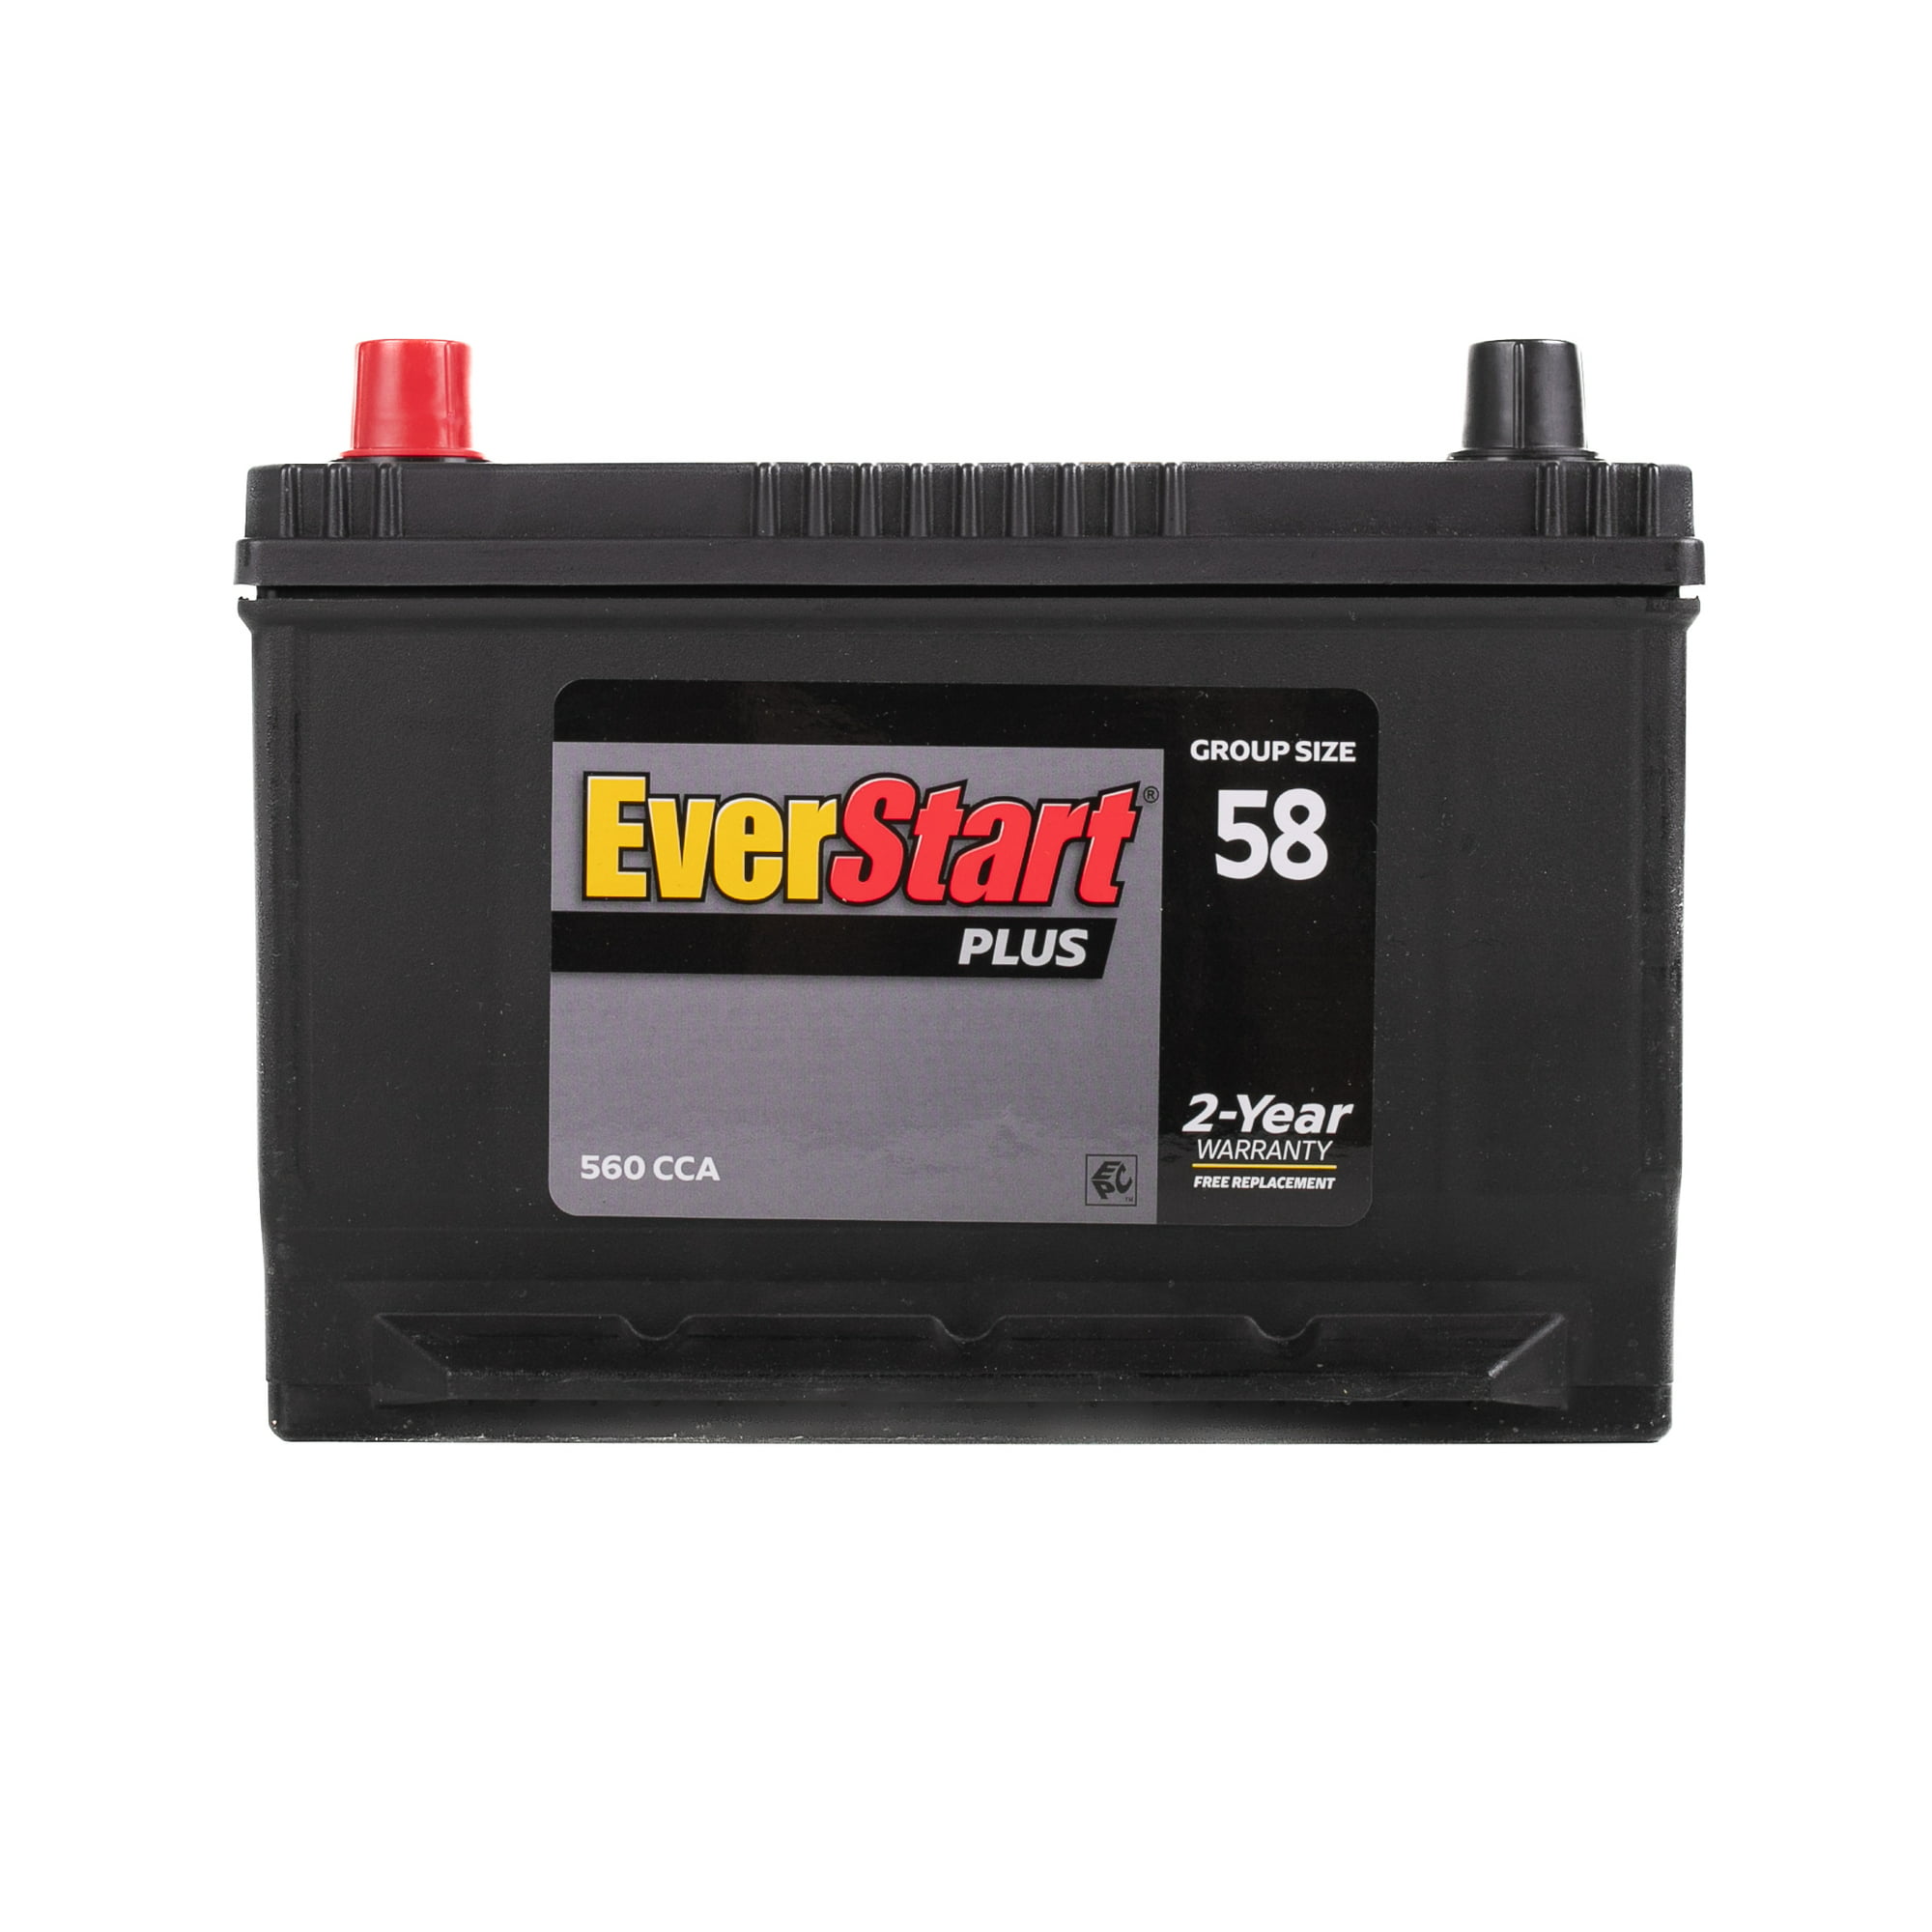 EverStart Value Lead Acid Automotive Battery, Group Size 75 12 Volt, 550  CCA 